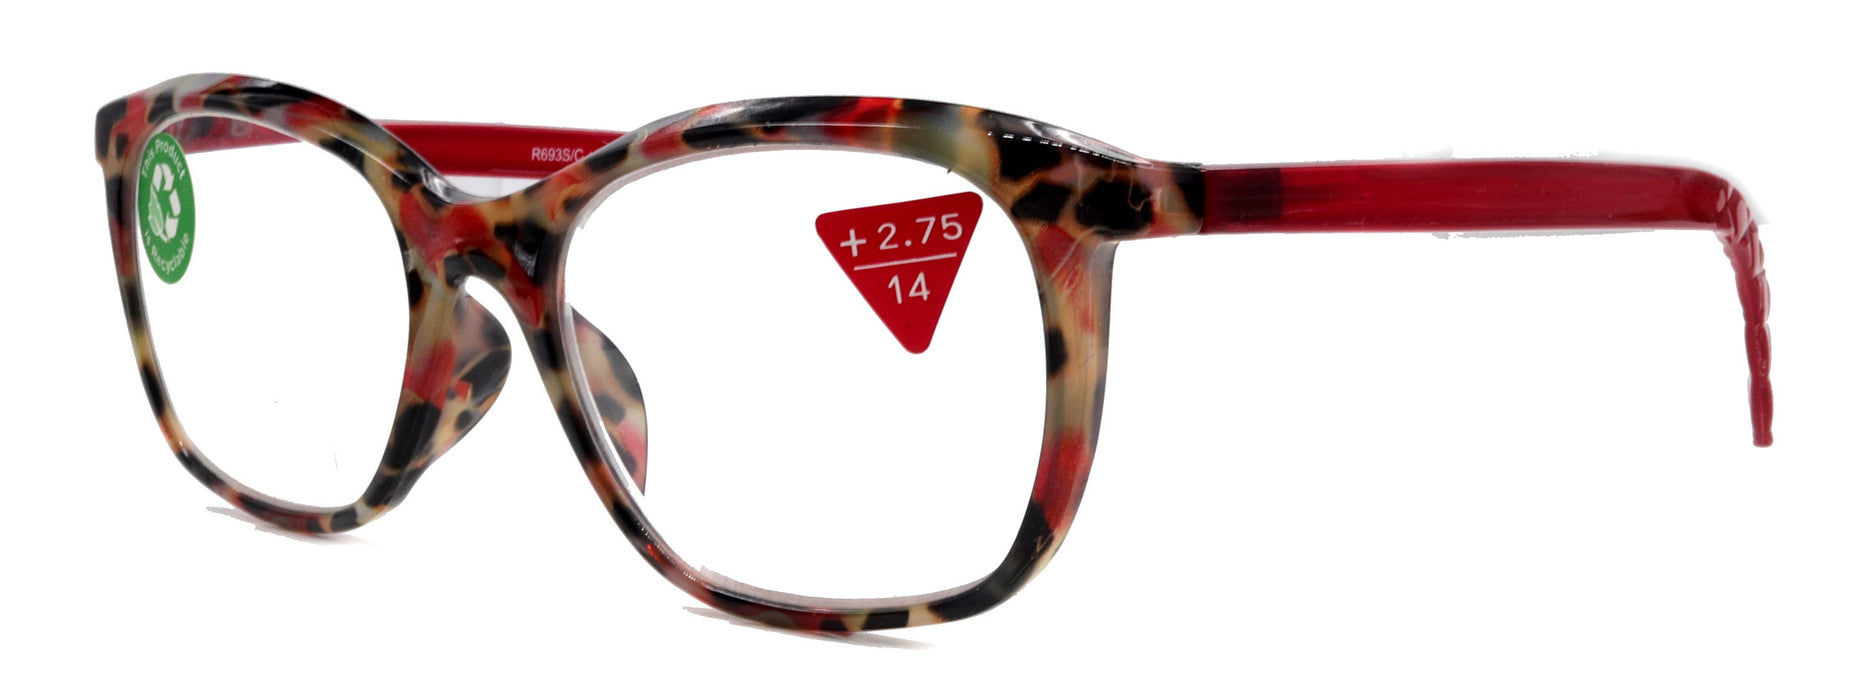 Venus, (Premium) Reading Glasses, High End Readers +1.25..+4 Magnifying glasses, Rectangular. Optical Frame (Tortoise Red) NY Fifth Avenue.